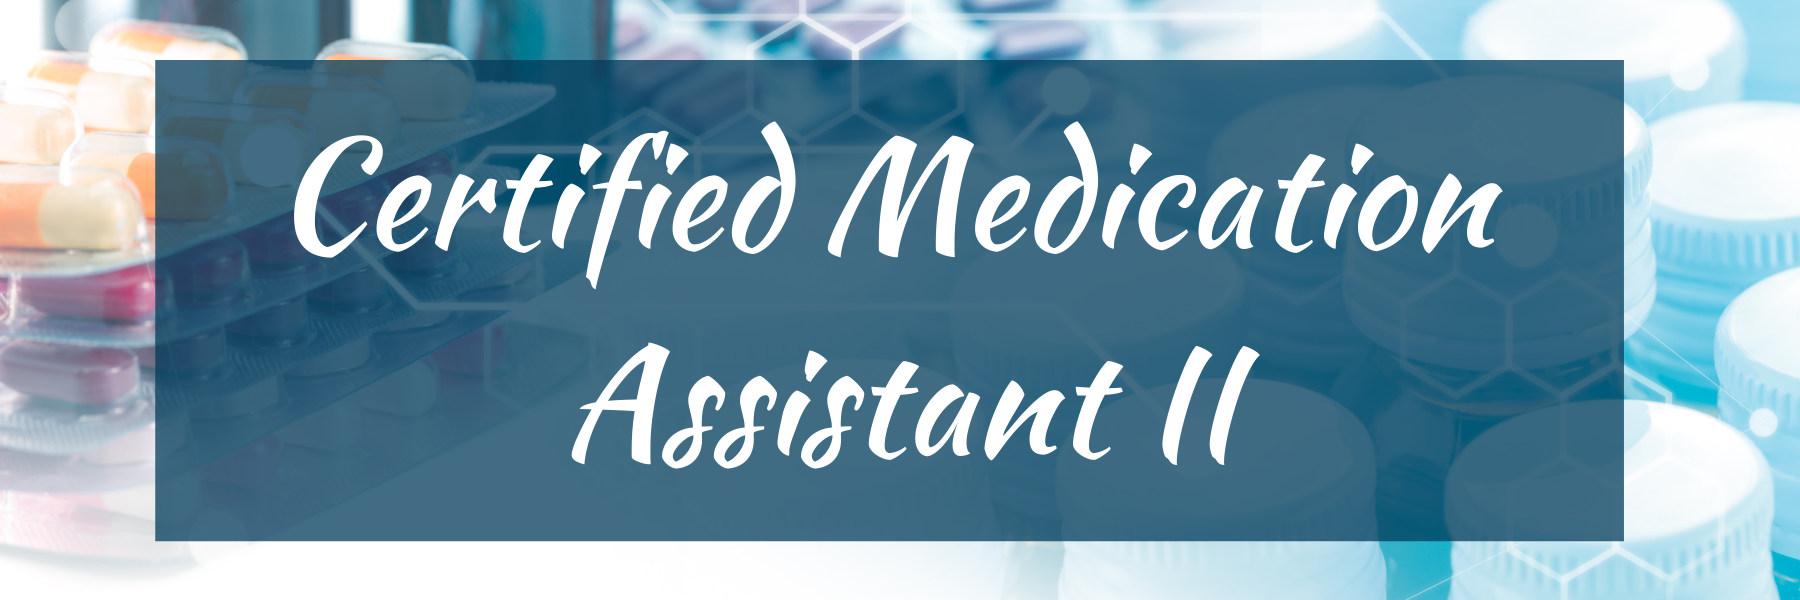 certified medication assistant ii